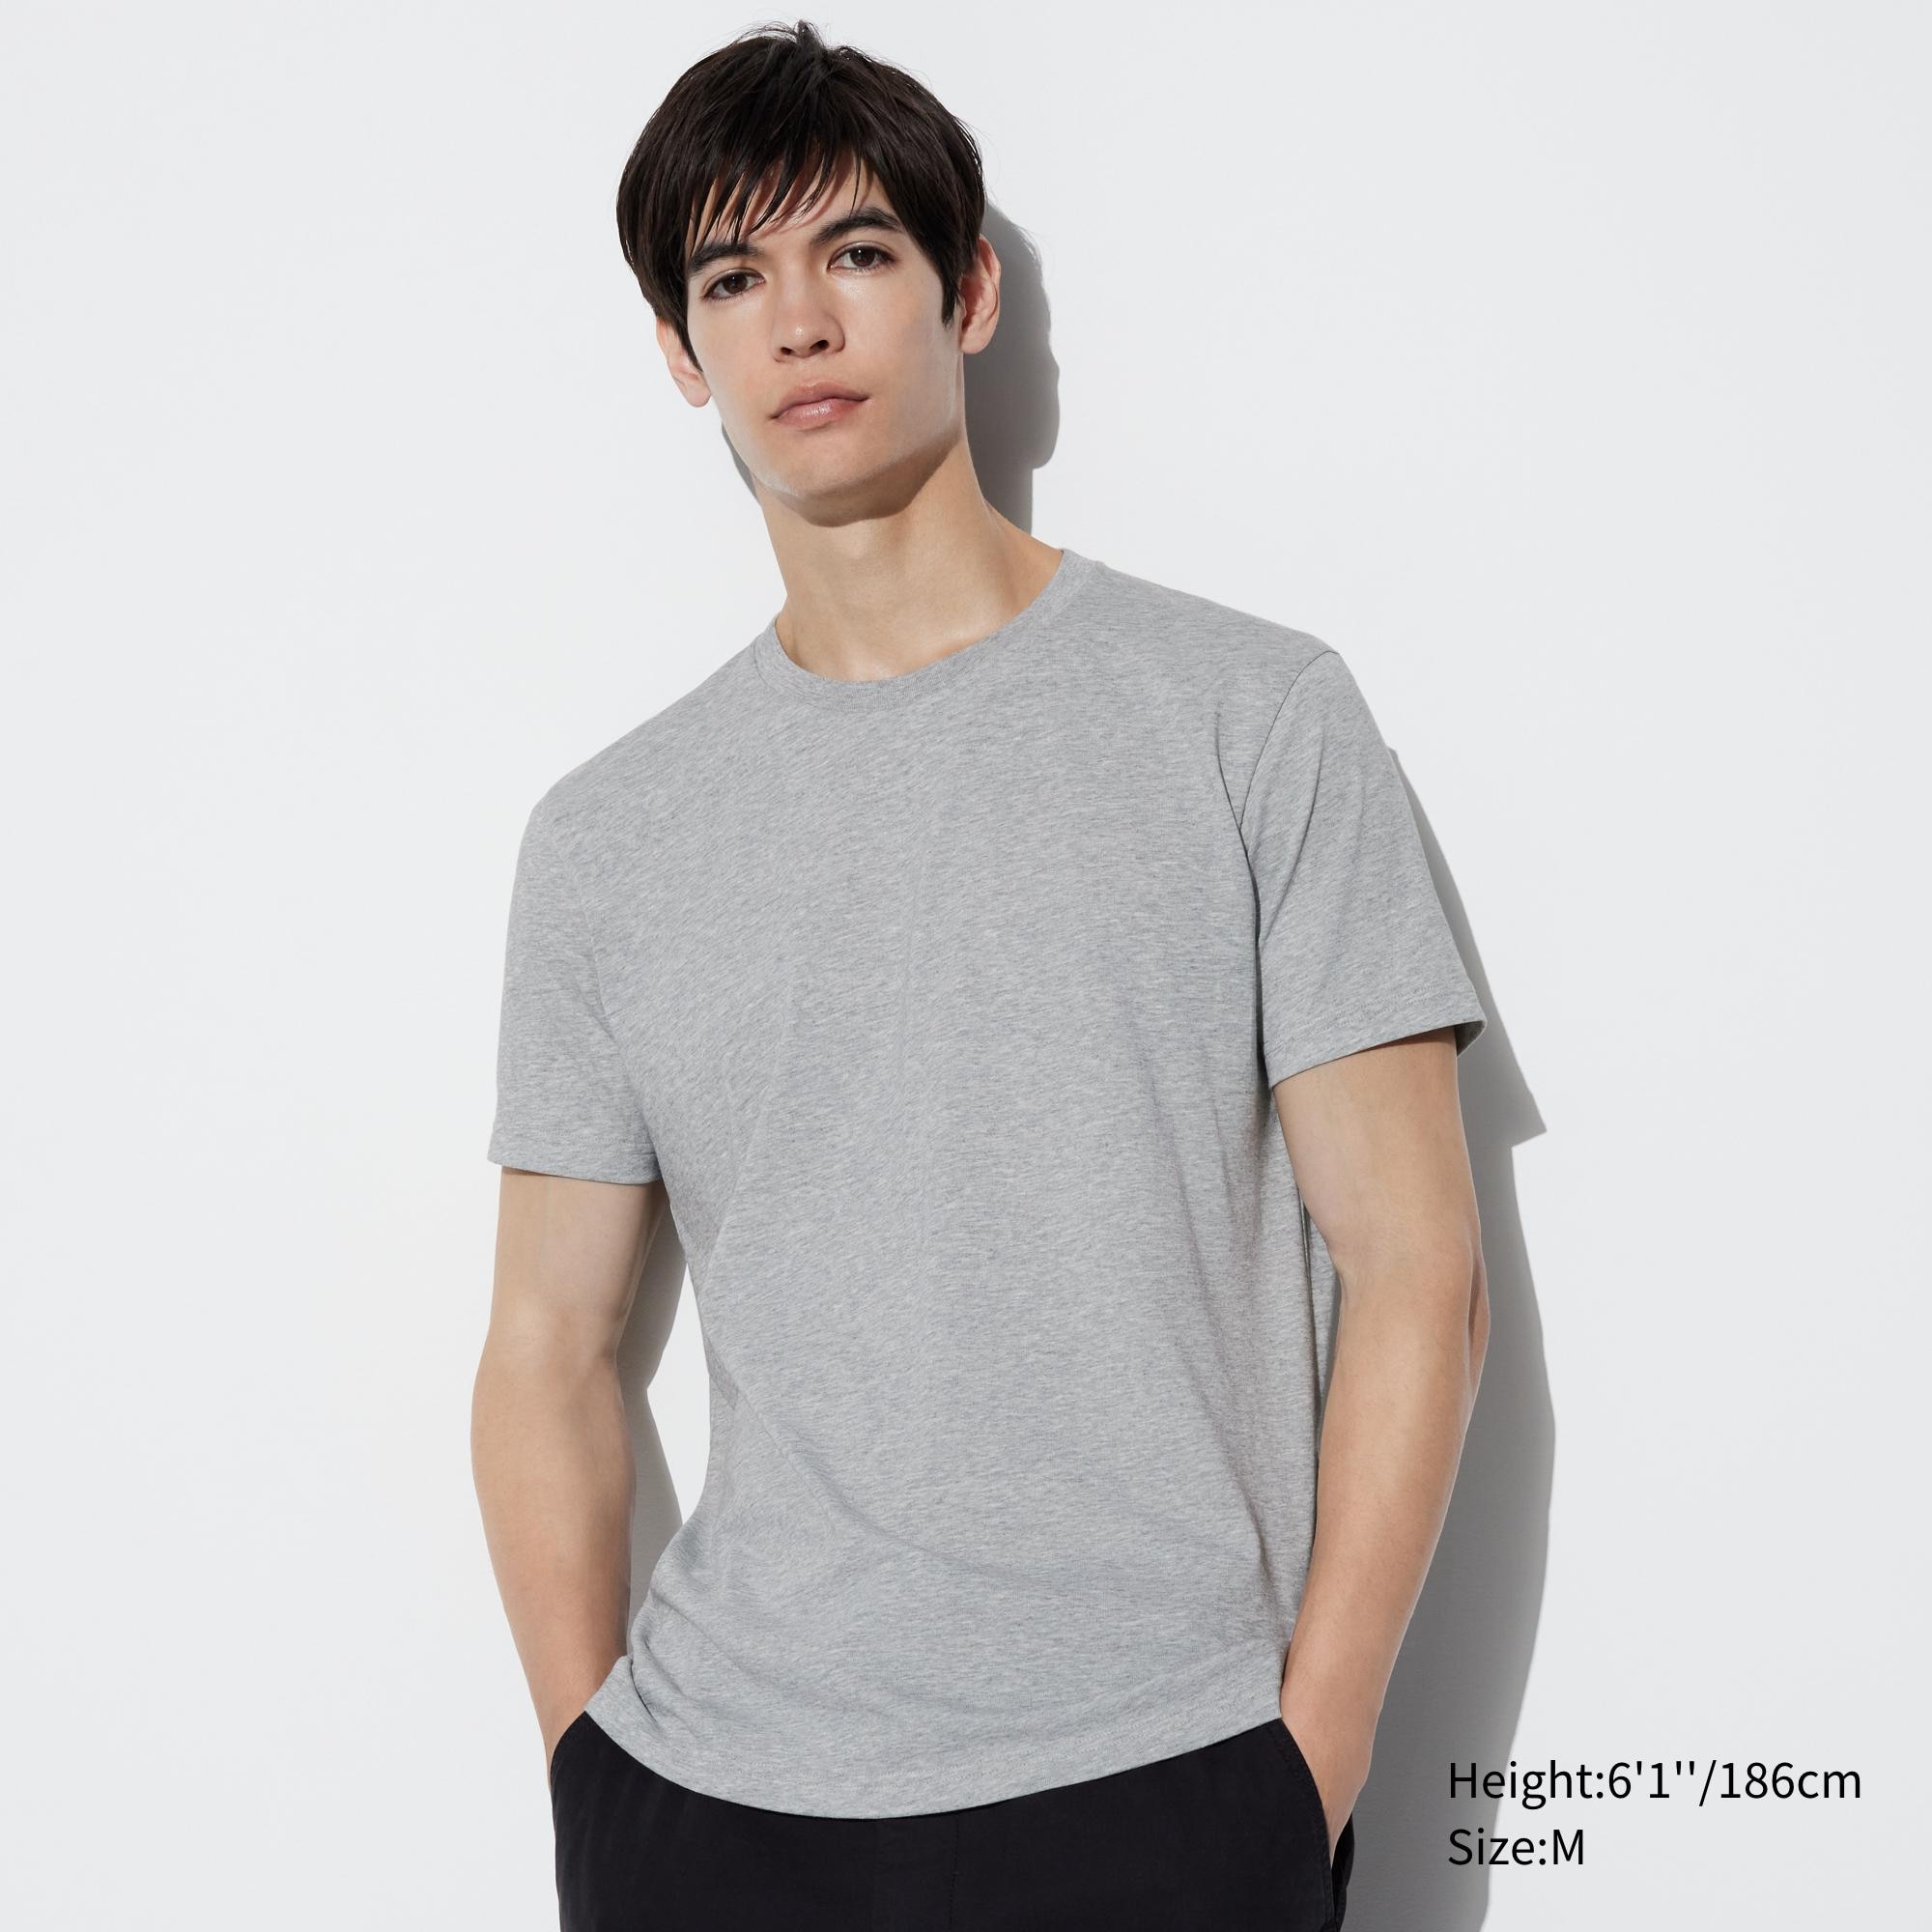 Men's Tight T-shirts Summer Cotton Tees T Shirt Man Causal Undershirts Slim  Fit V-neck Button Collar Short Sleeve Big Size S-3XL